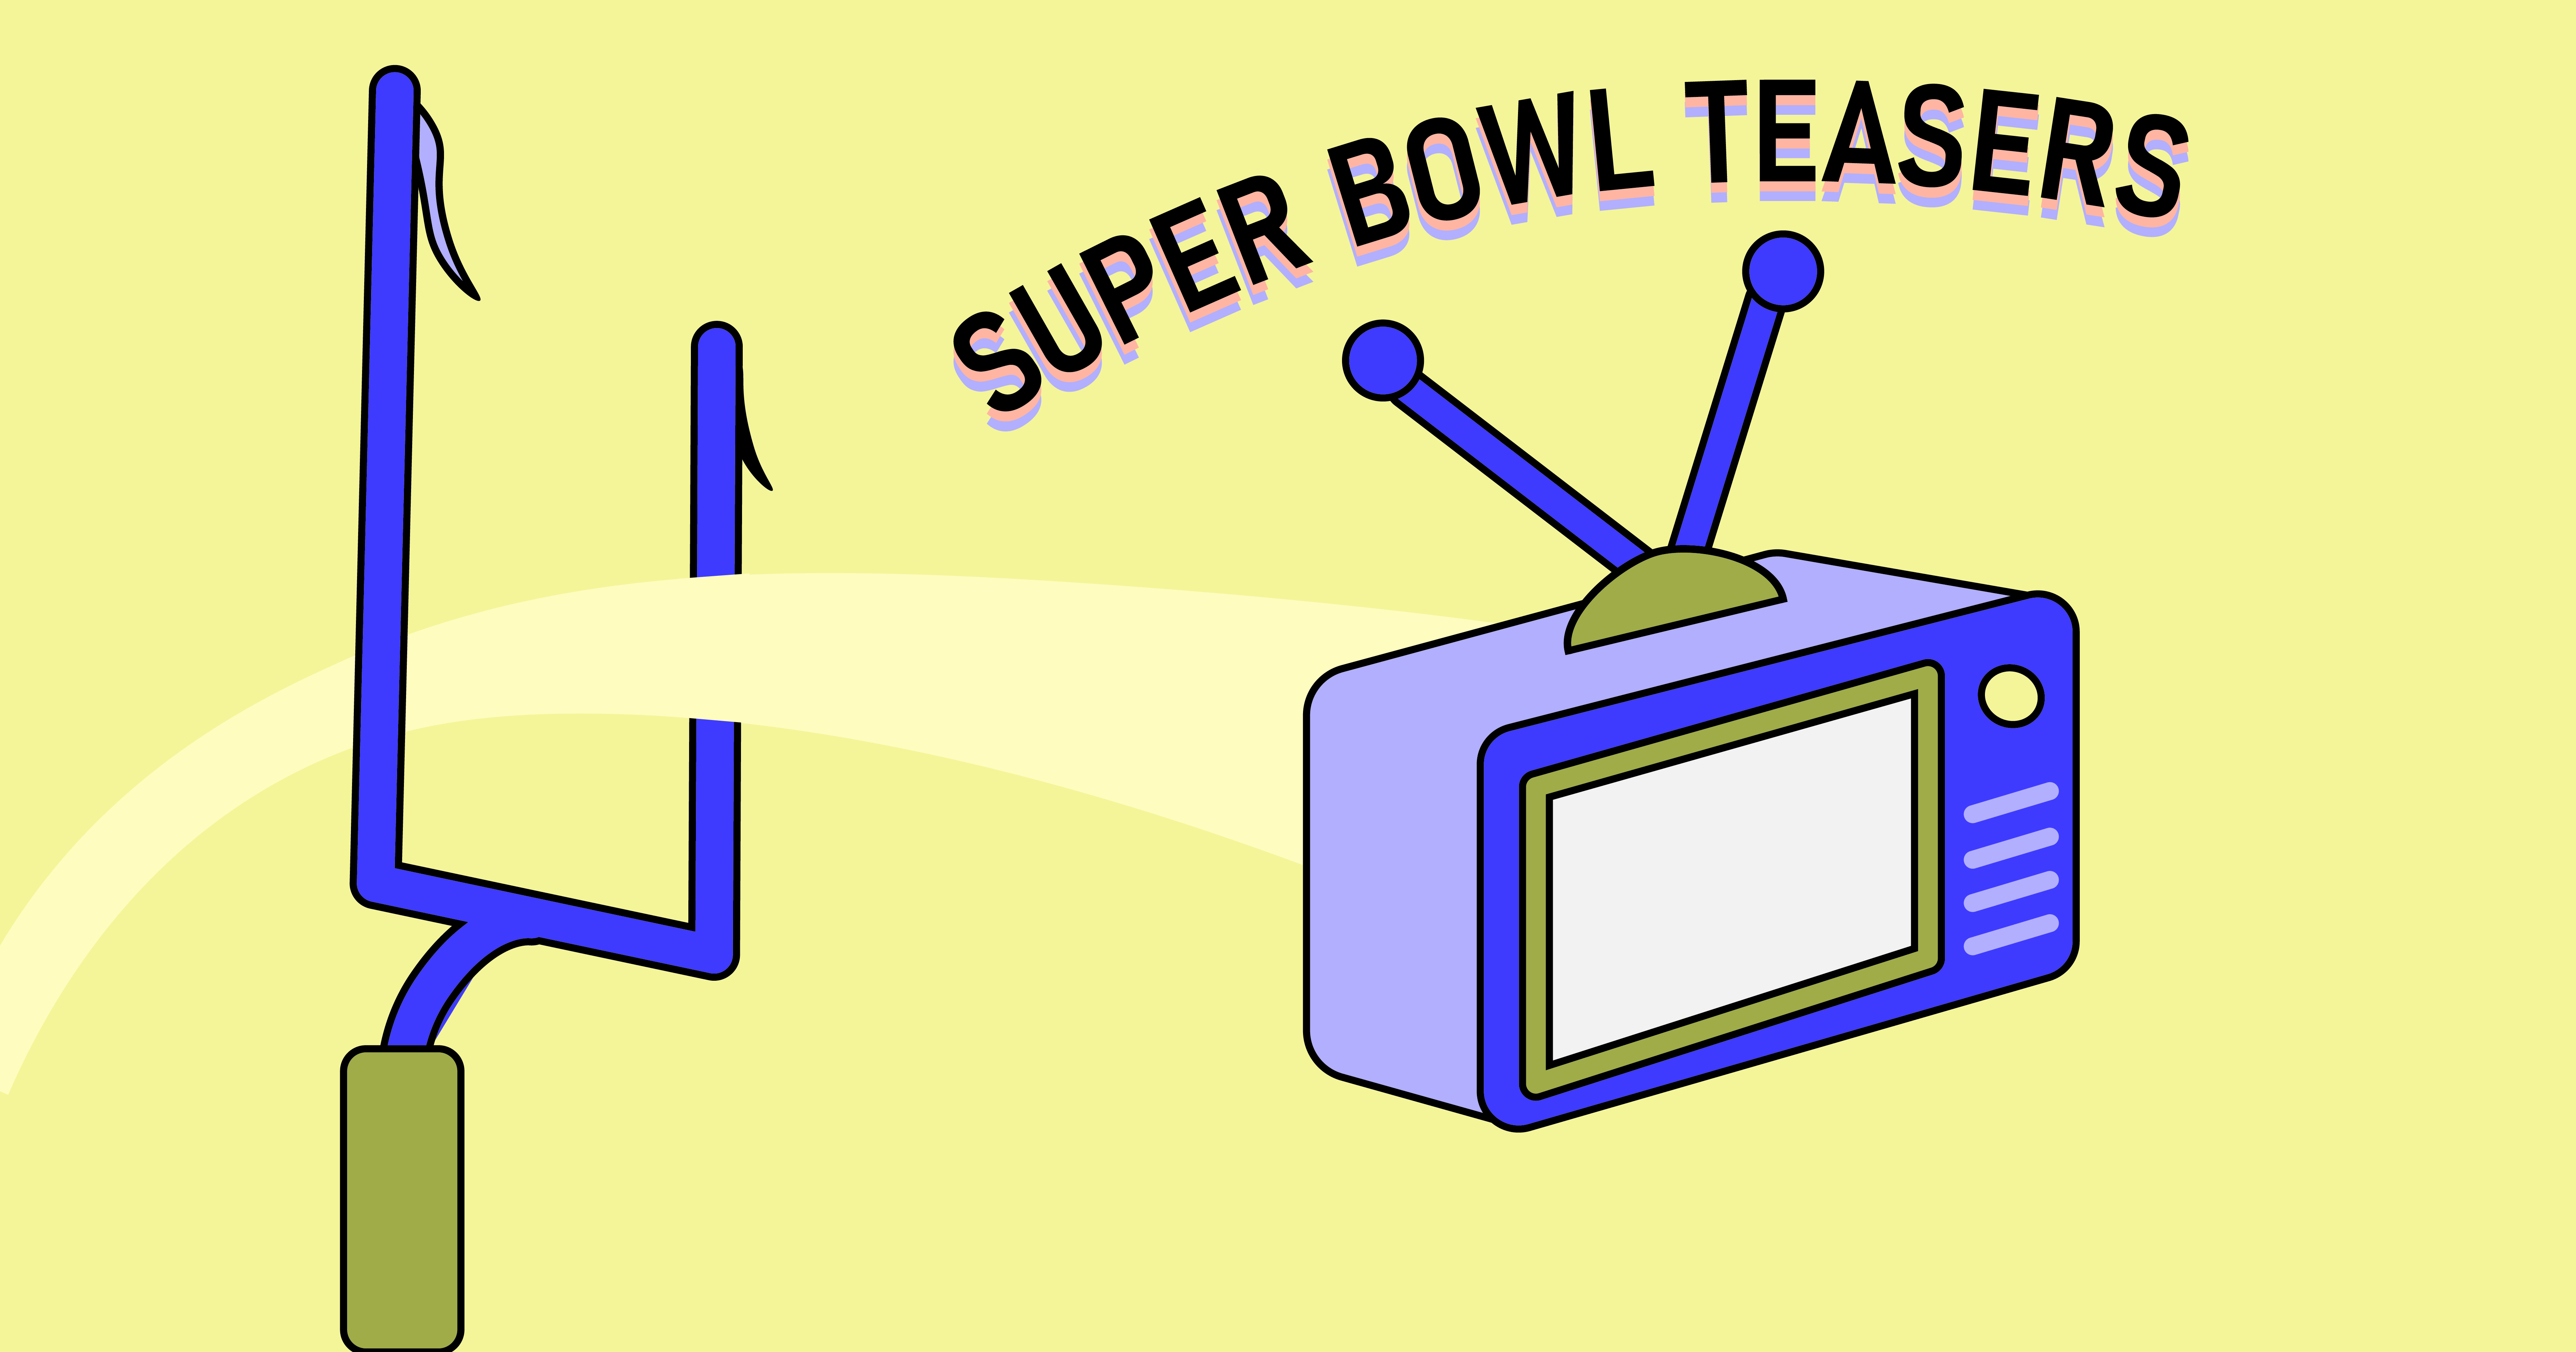 Super Bowl Teasers